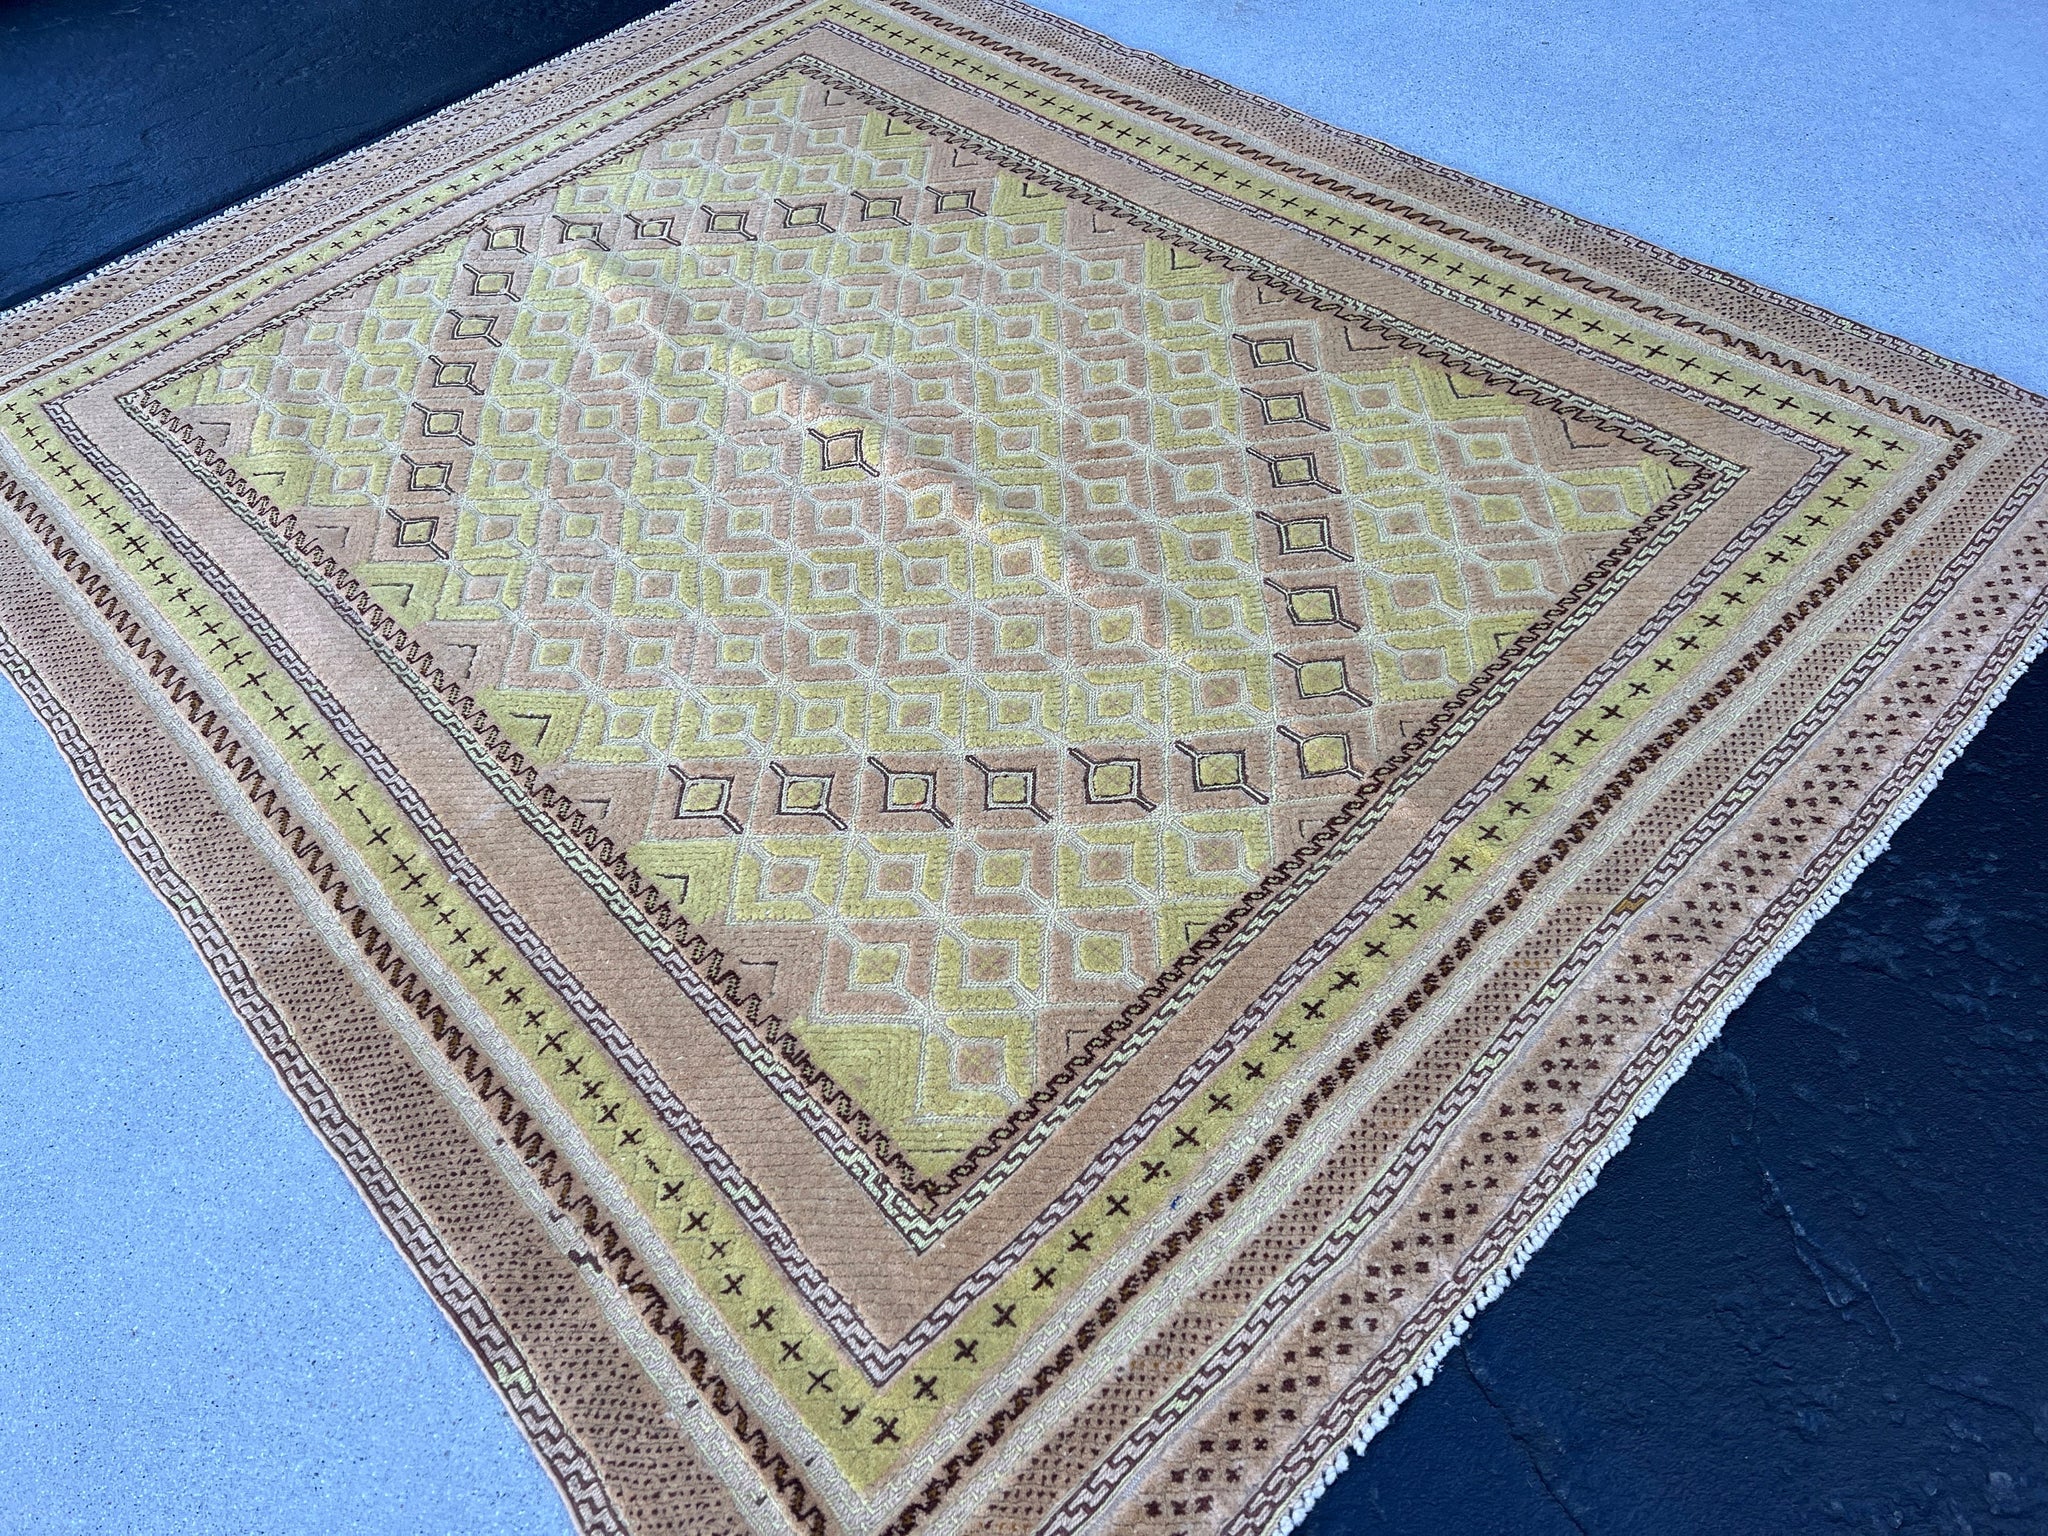 5x6 (150x180) Handmade Afghan Rug | Taupe Yellow Cornsilk Cream Beige Chocolate Brown | Hand Knotted Geometric Turkish Wool